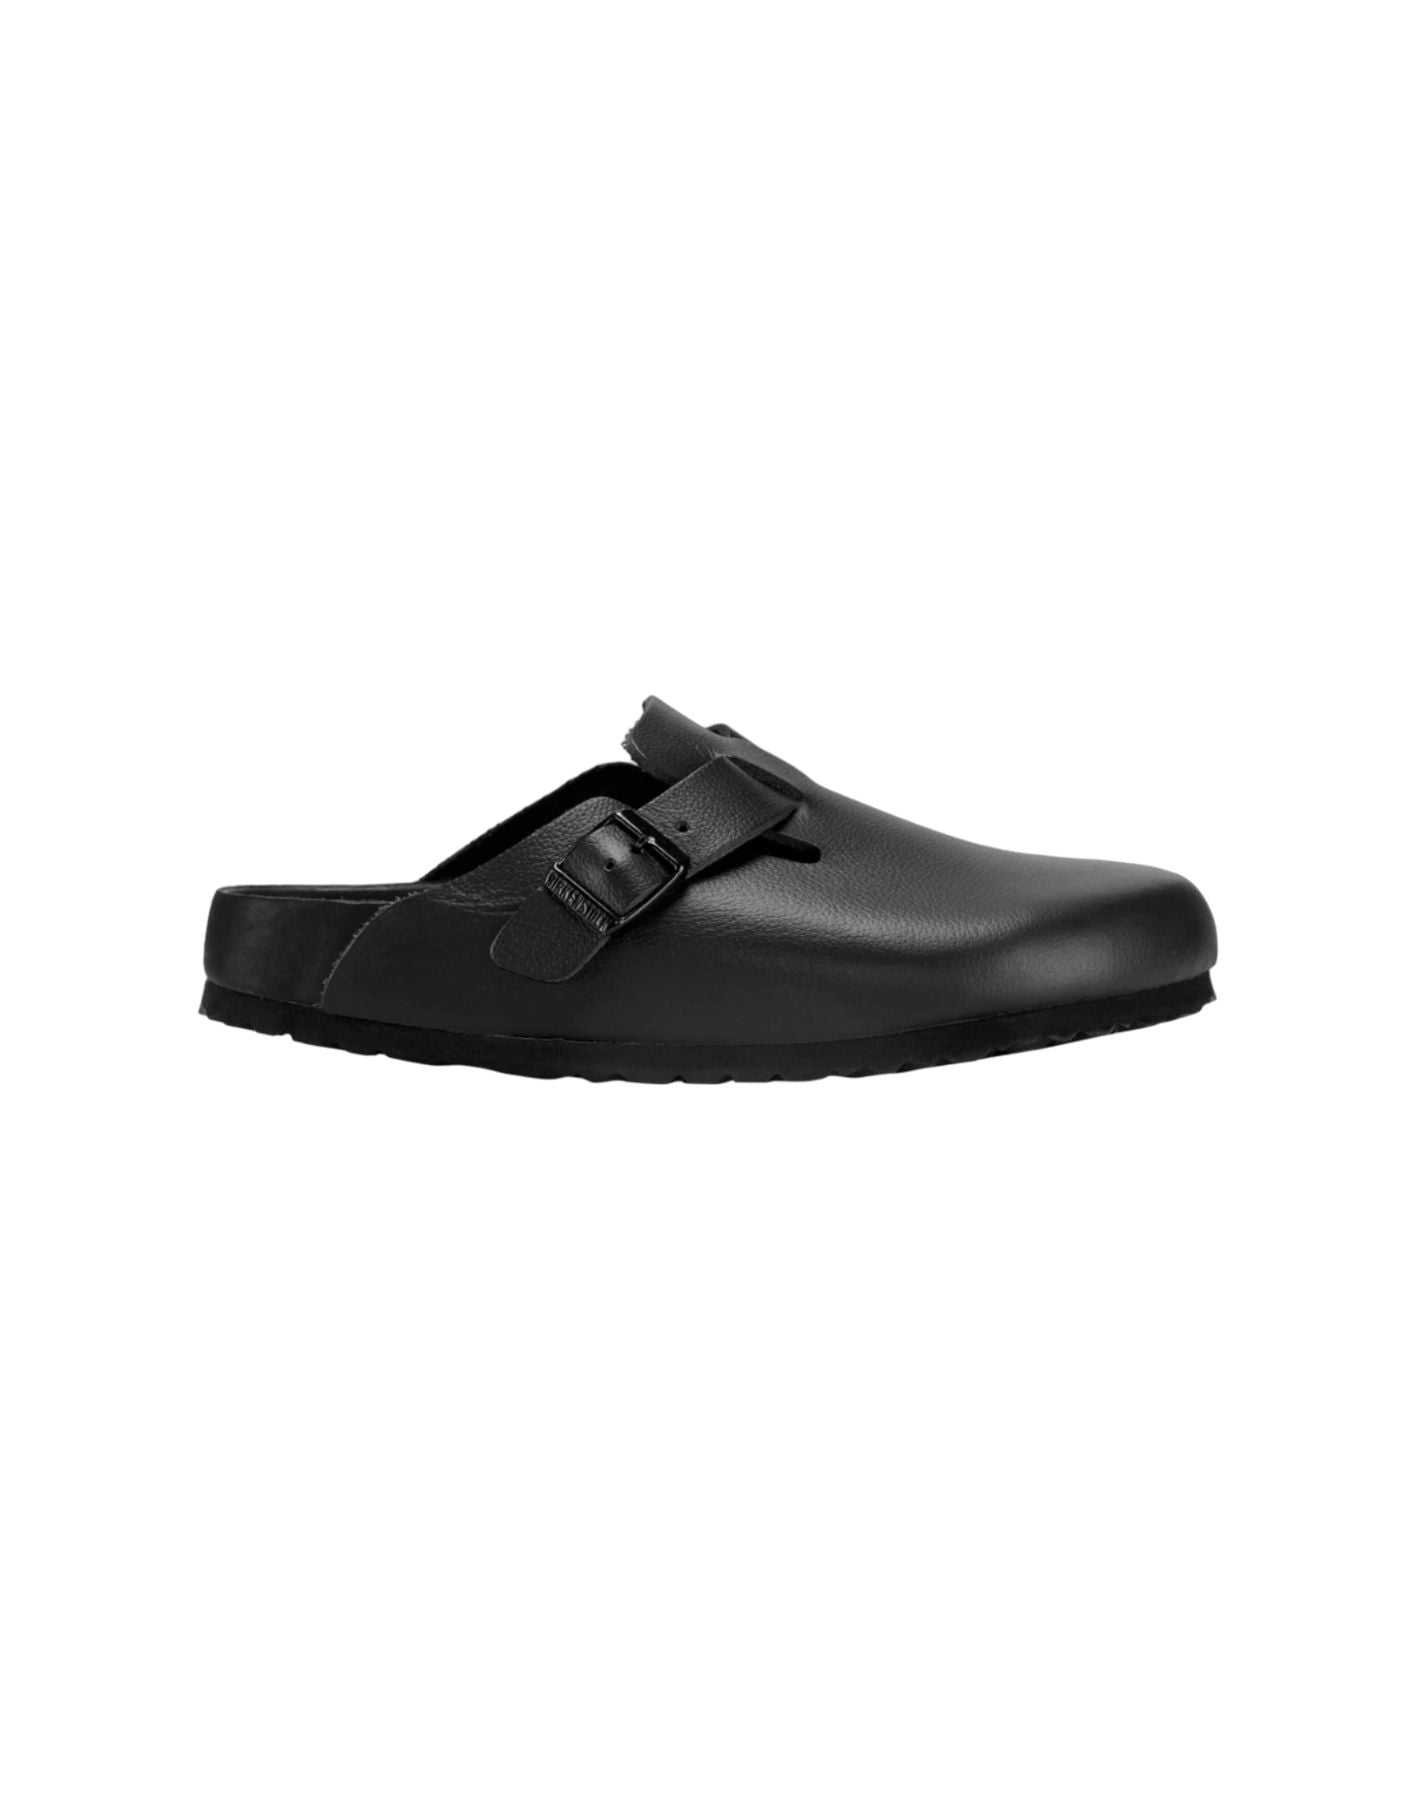 Schuhe für Frau 1023744 W schwarze Birkenstock